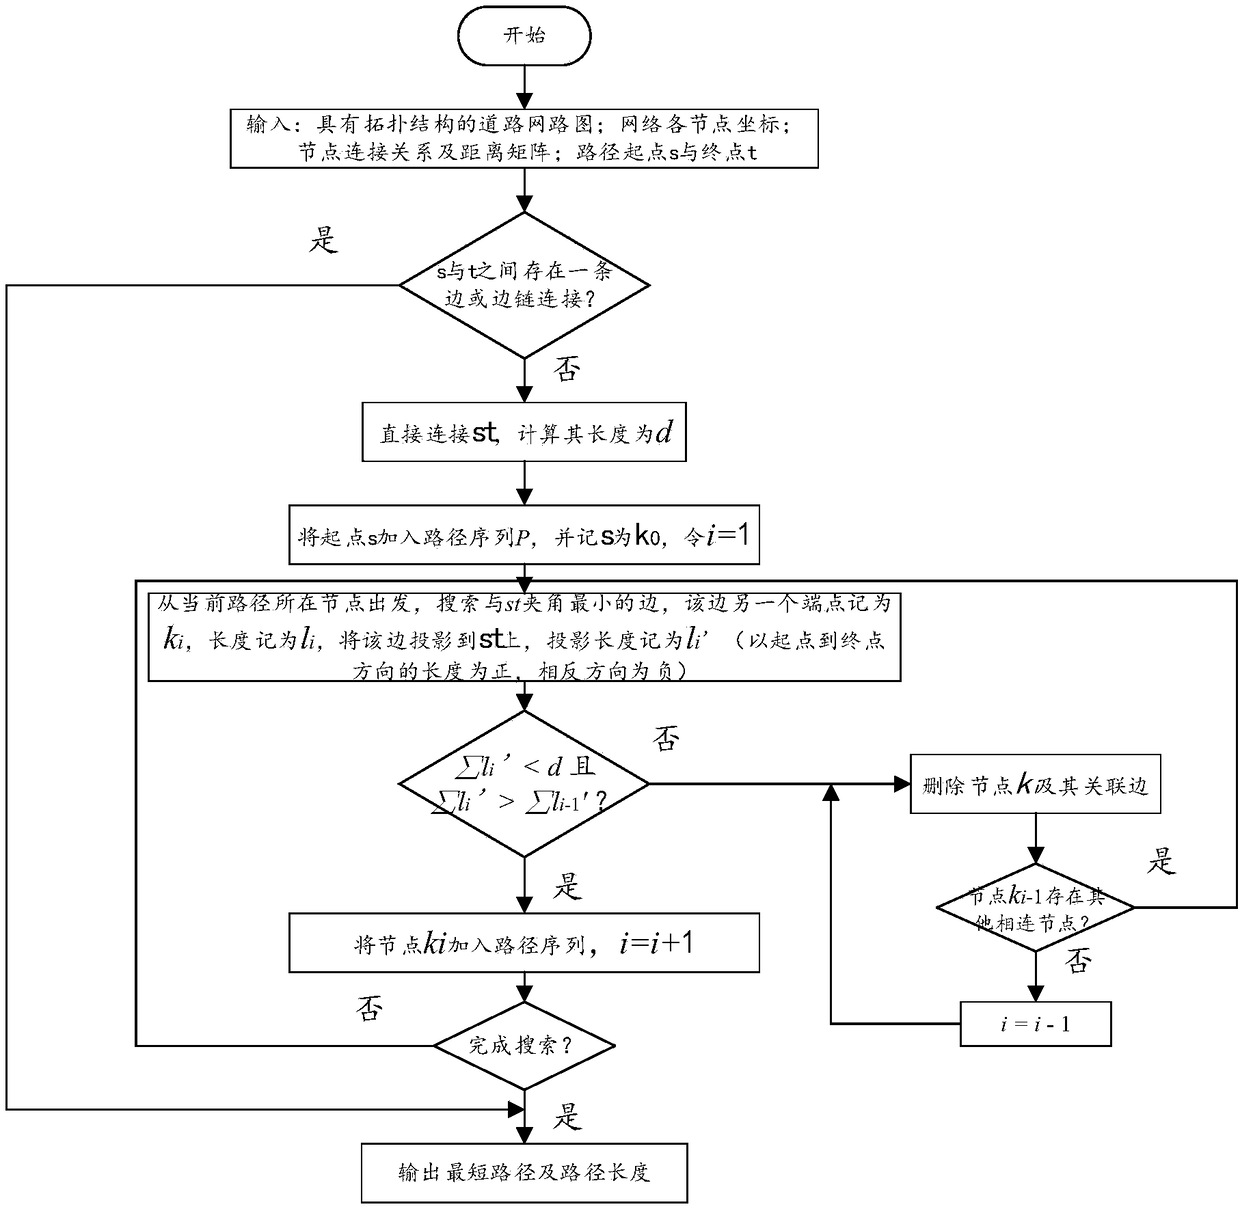 Shortest path planning method based on unidirectional searching model